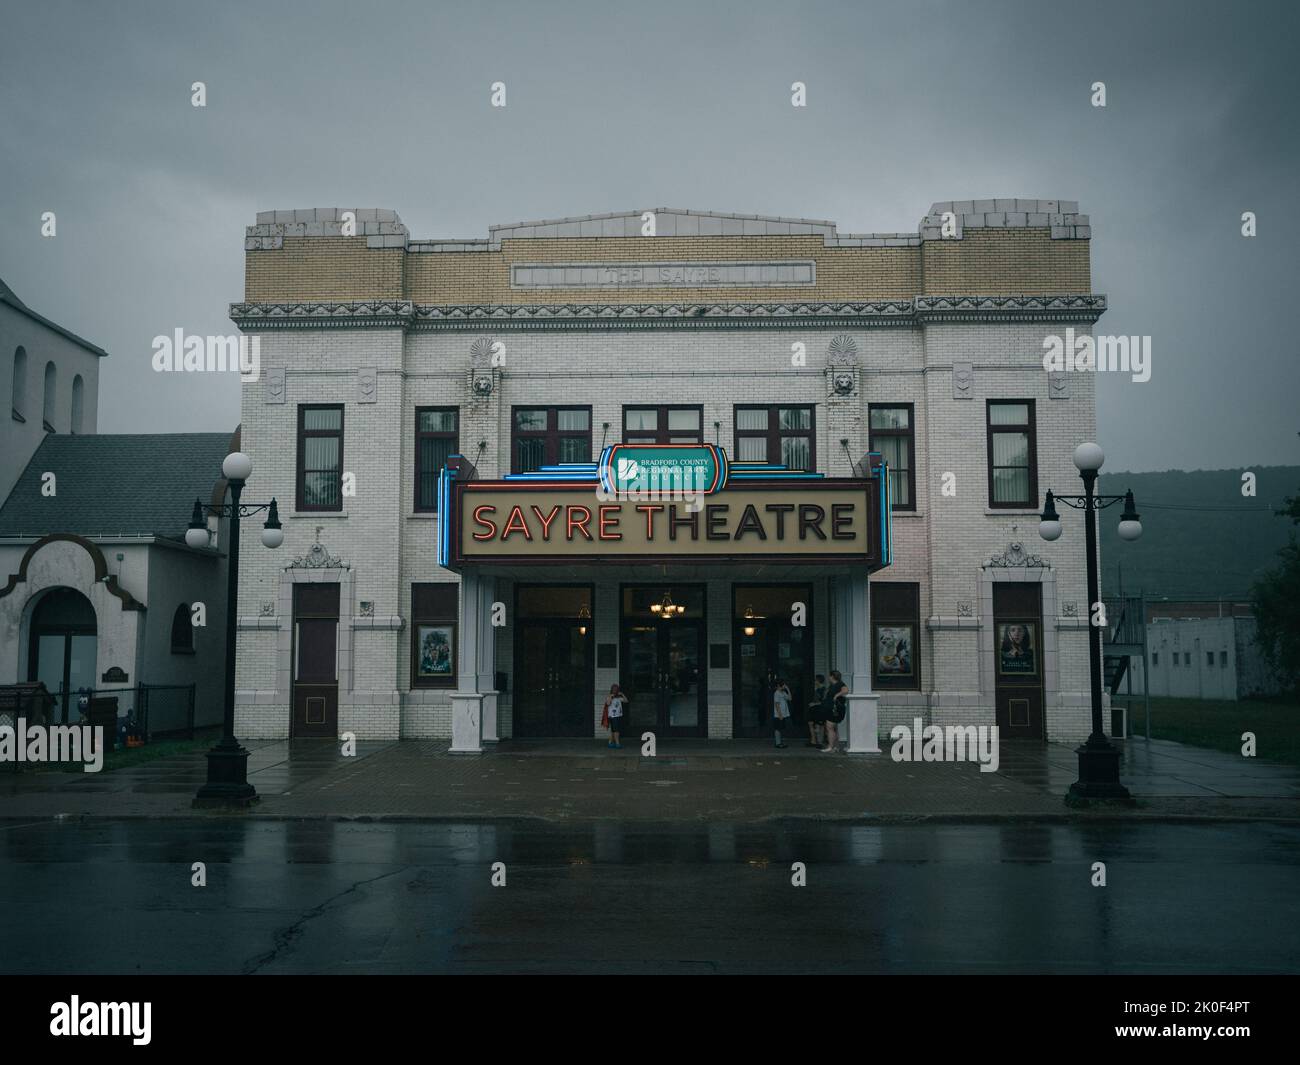 Sayre Theatre on a rainy day, Sayre, Pennsylvania Stock Photo